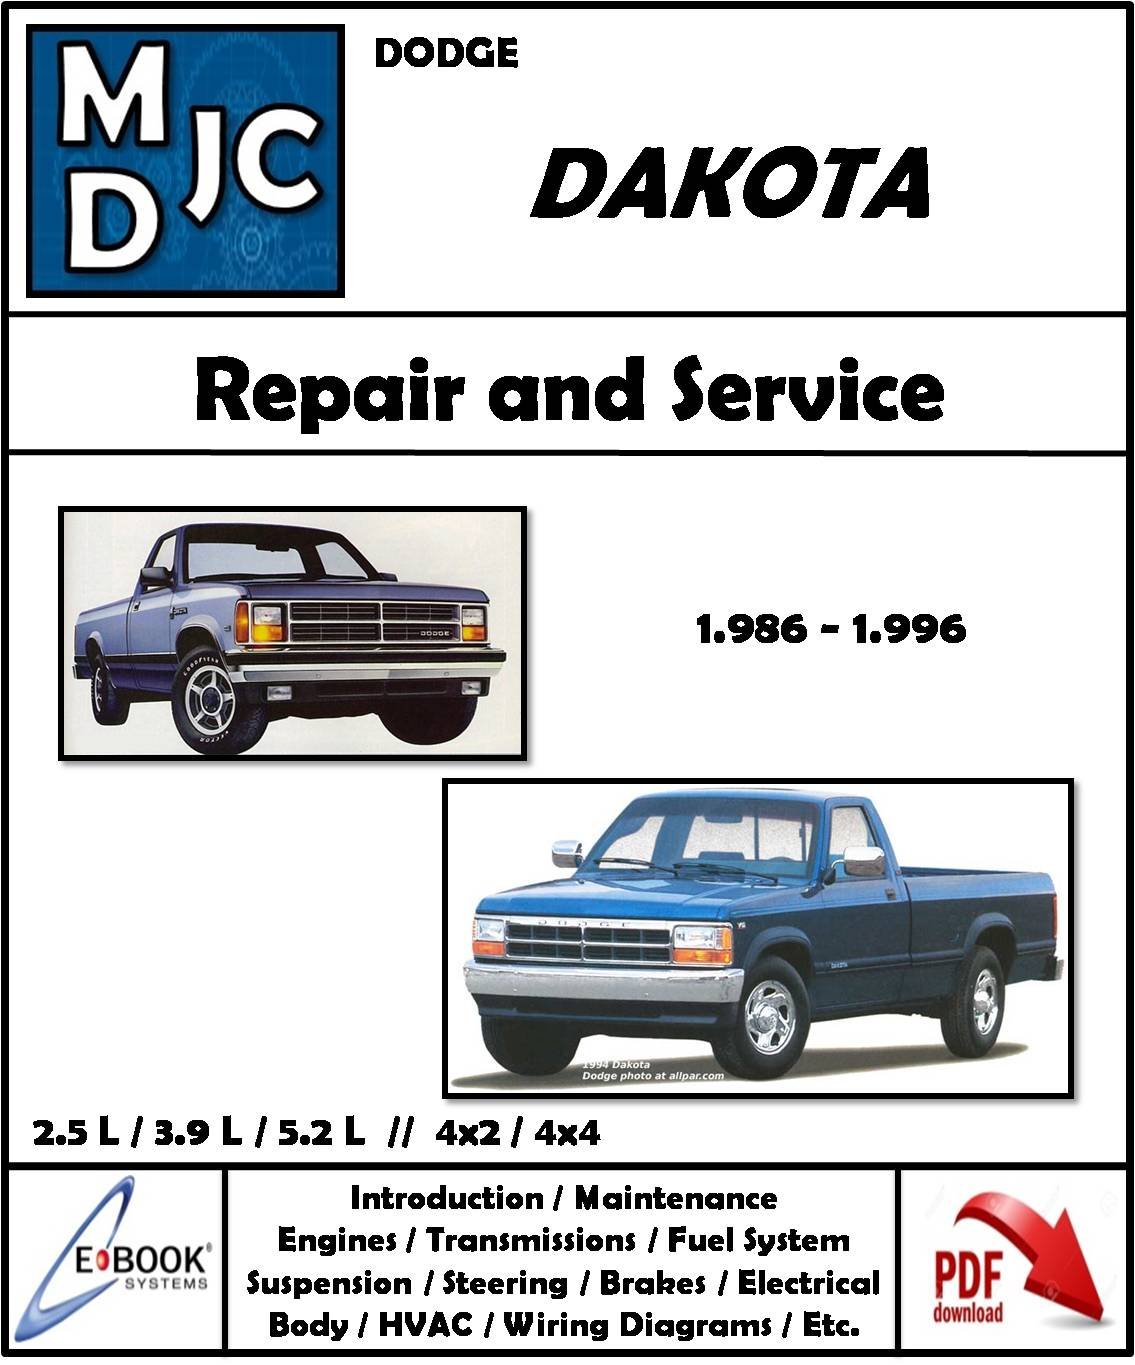 Manual de Taller Dodge Dakota 1986-1996